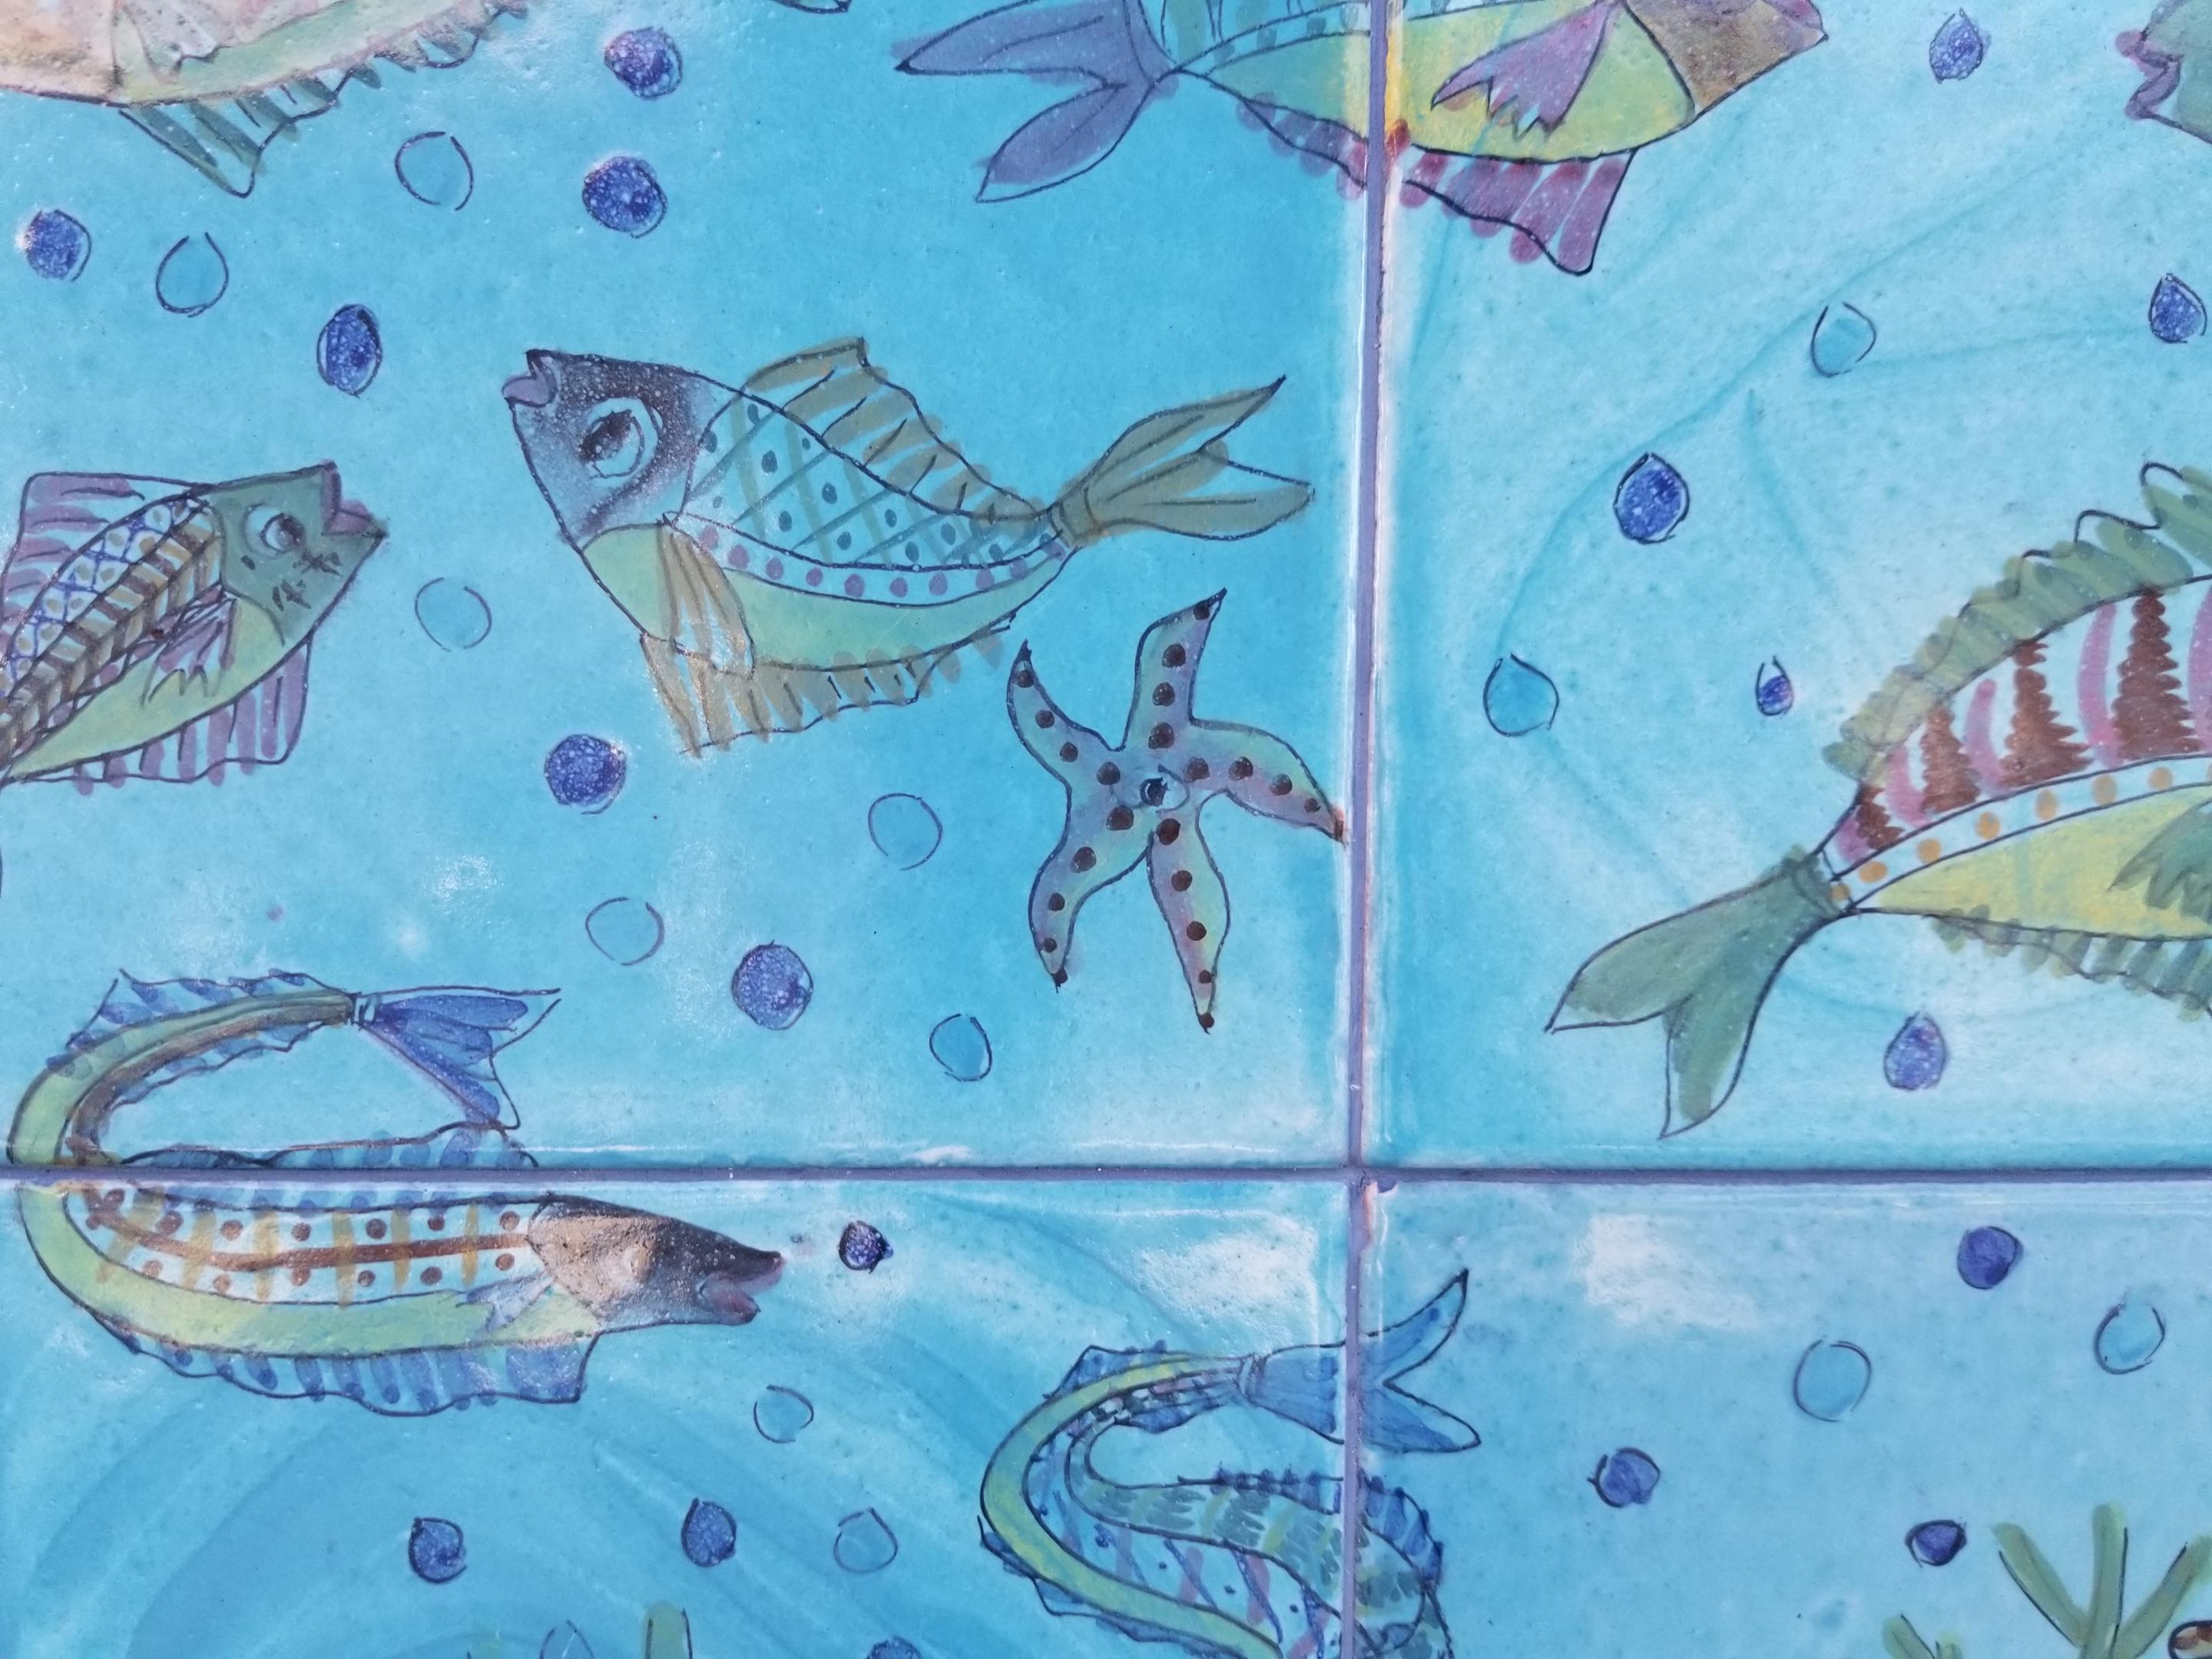 Aquatic Fish Plaster Wall Hanging Decoration Plaque Great For Bathrooms Tanks